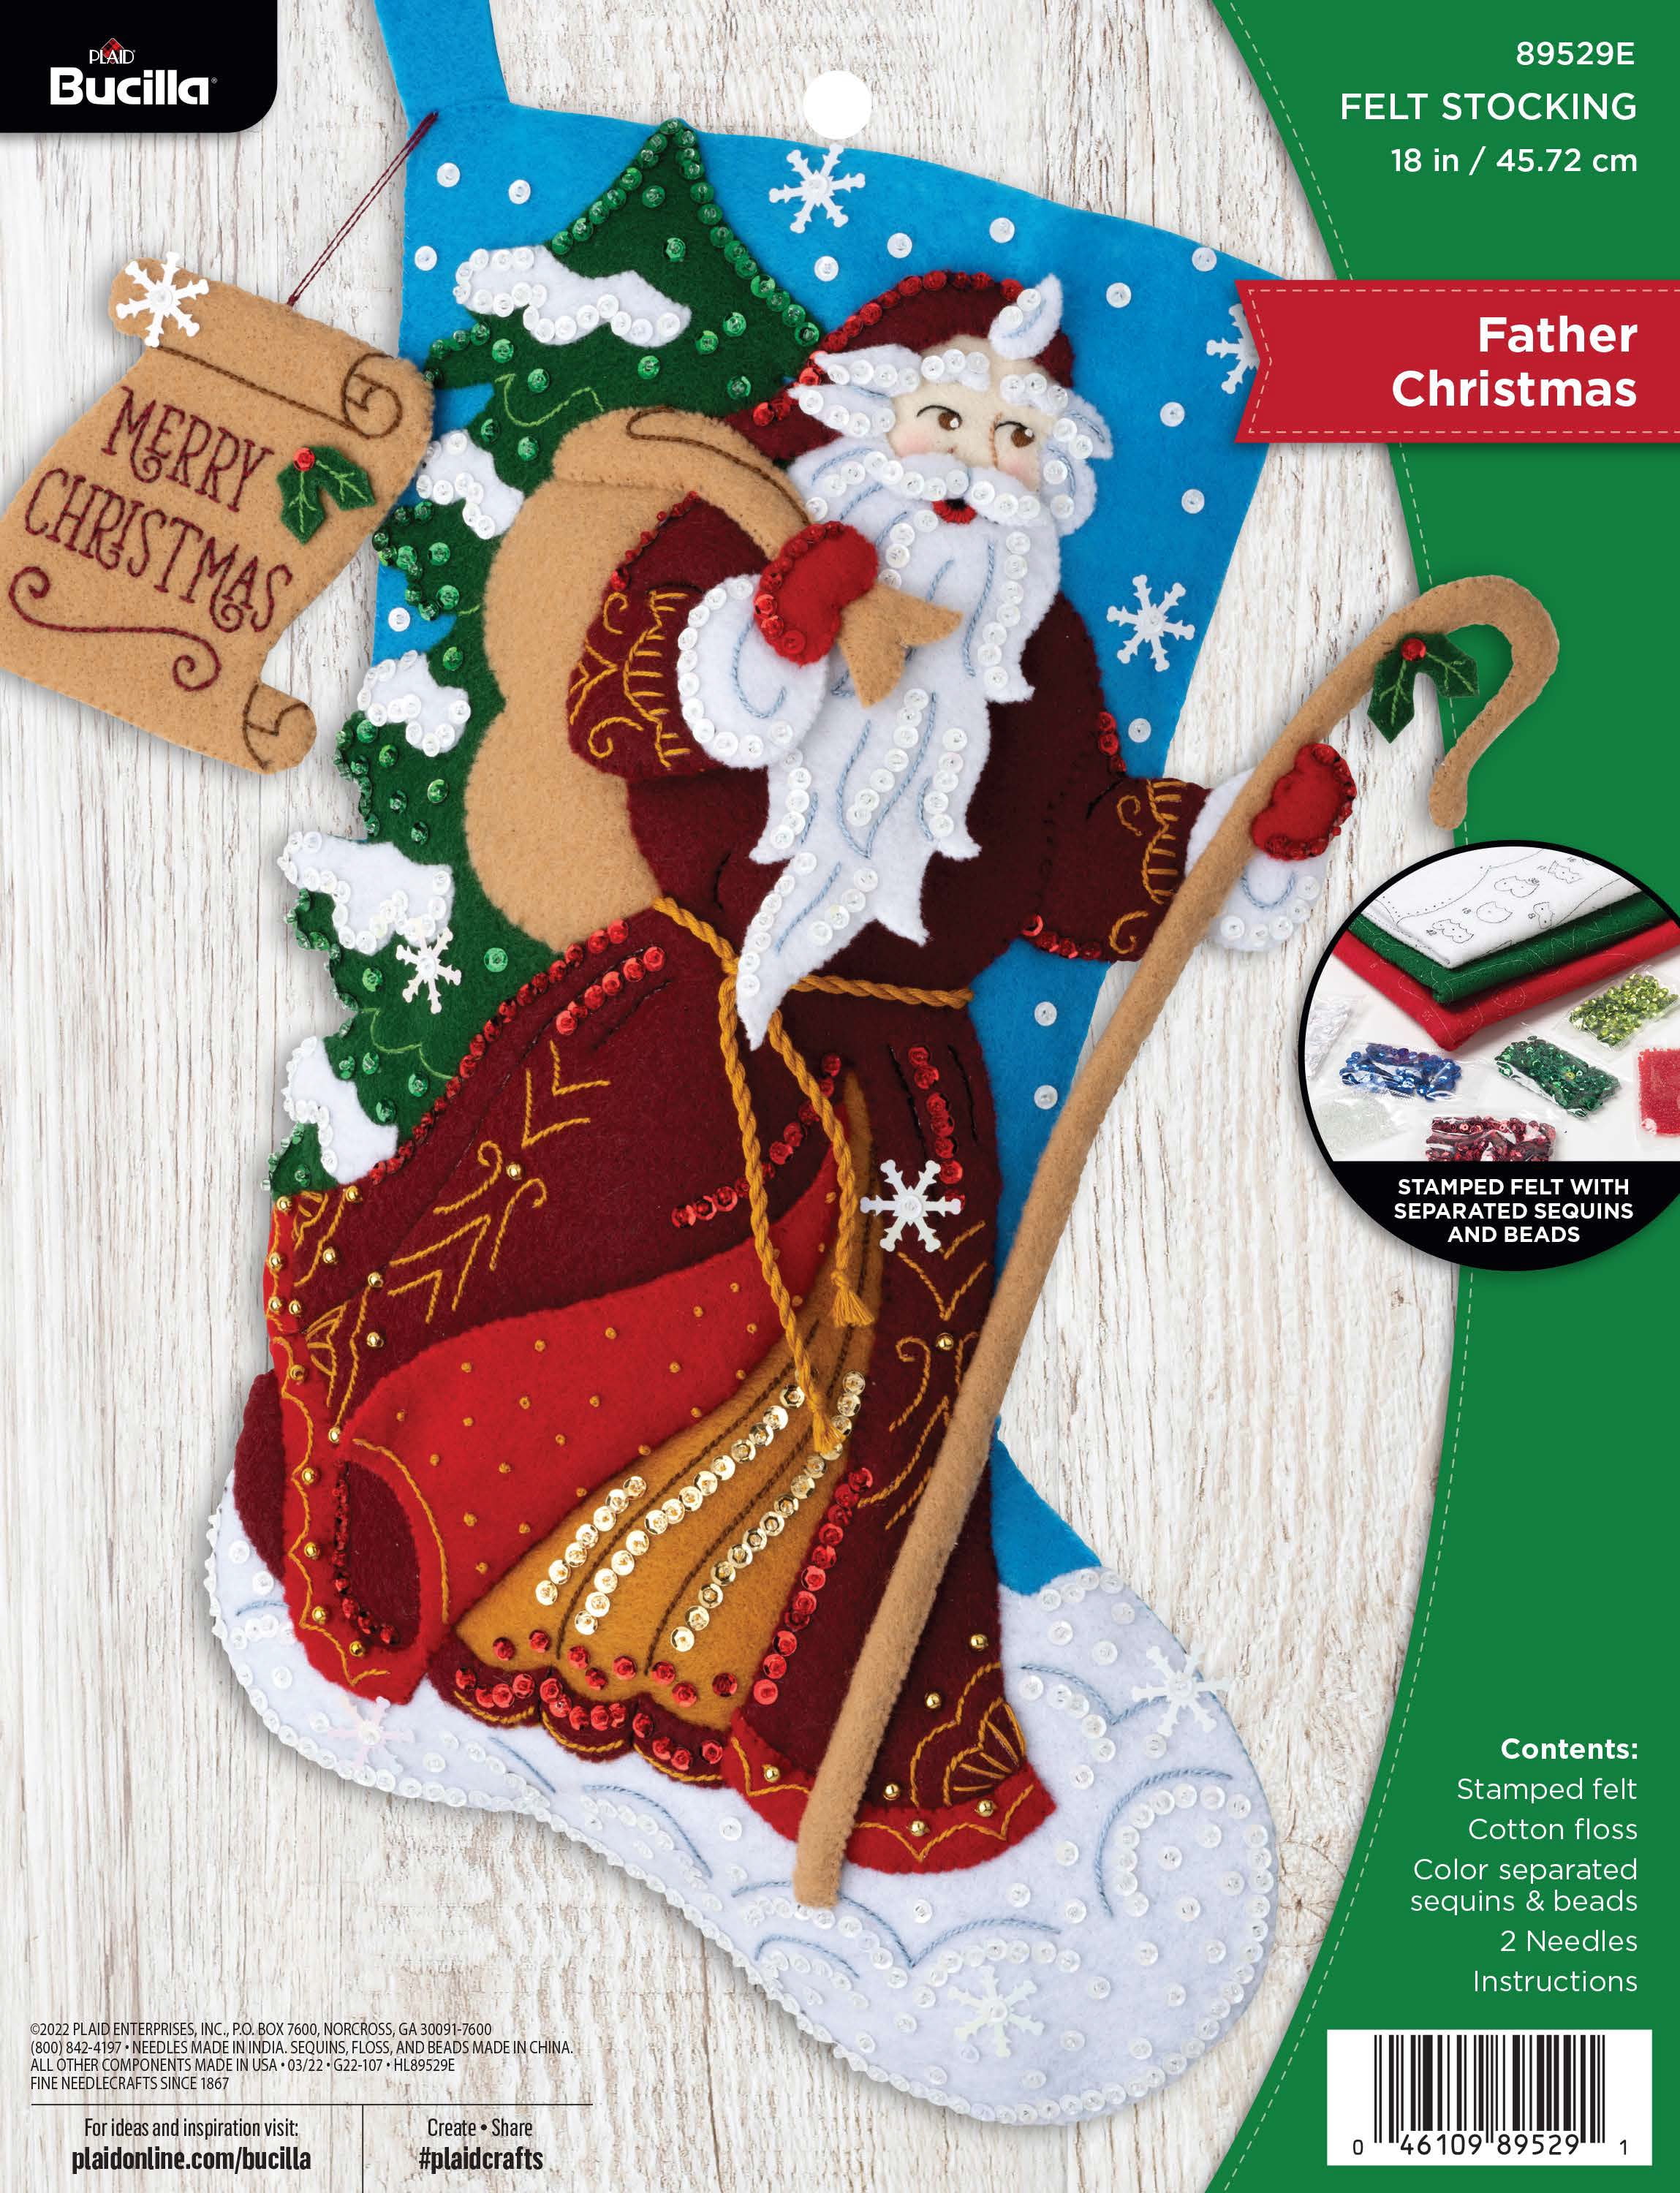 Bucilla Felt Applique 18 Christmas Stocking Kit, Sleigh Ride with